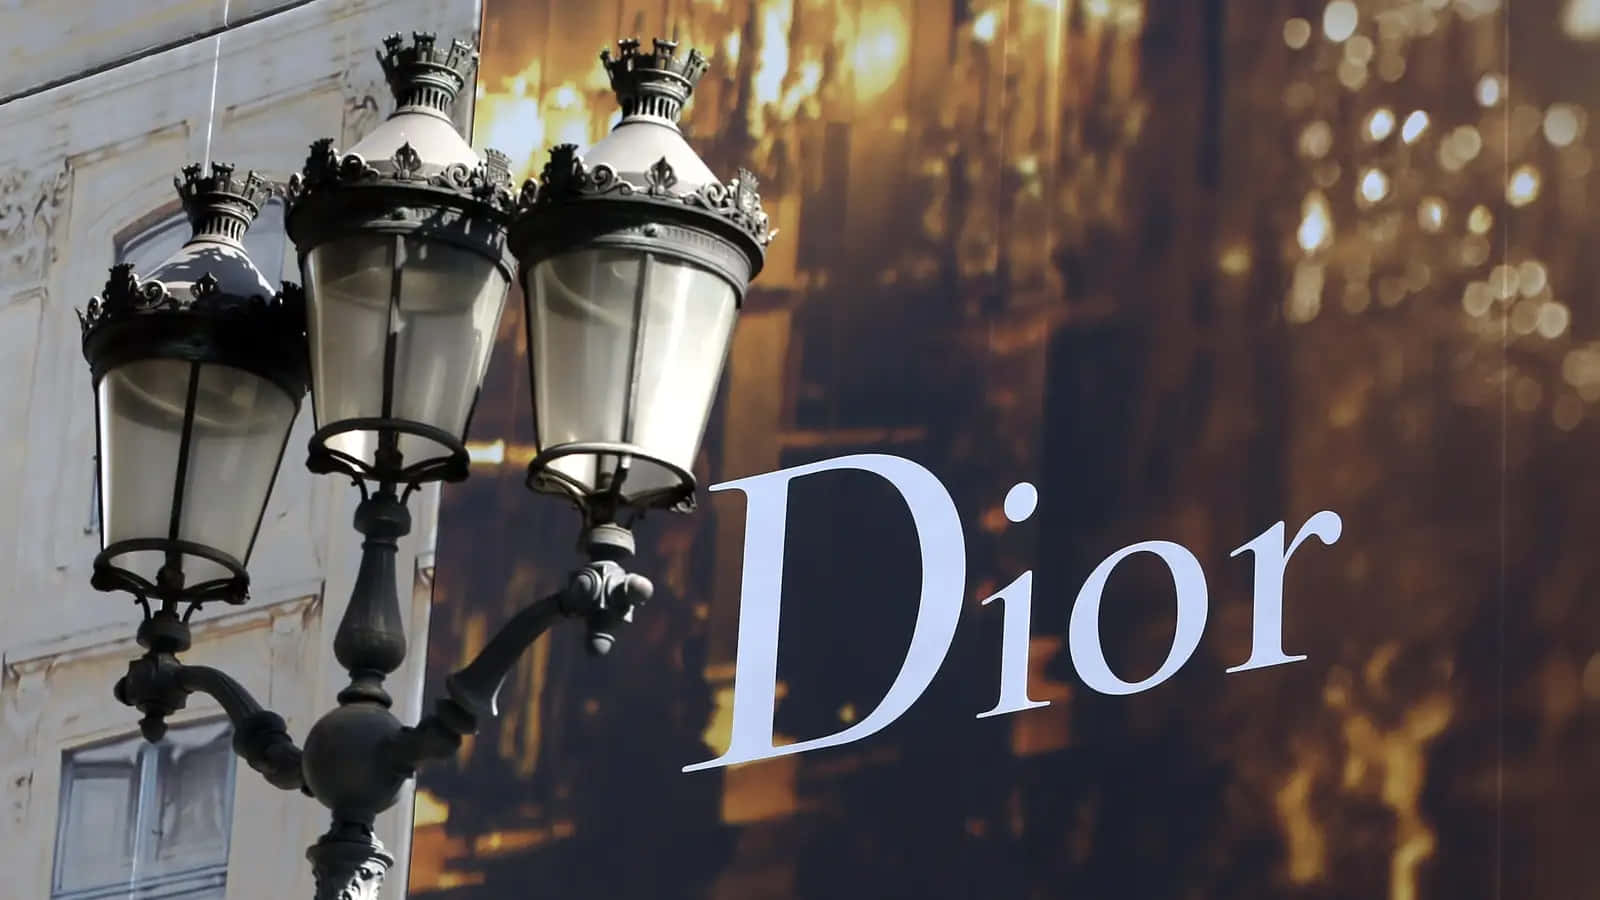 Dior Brand Street Lamps Wallpaper